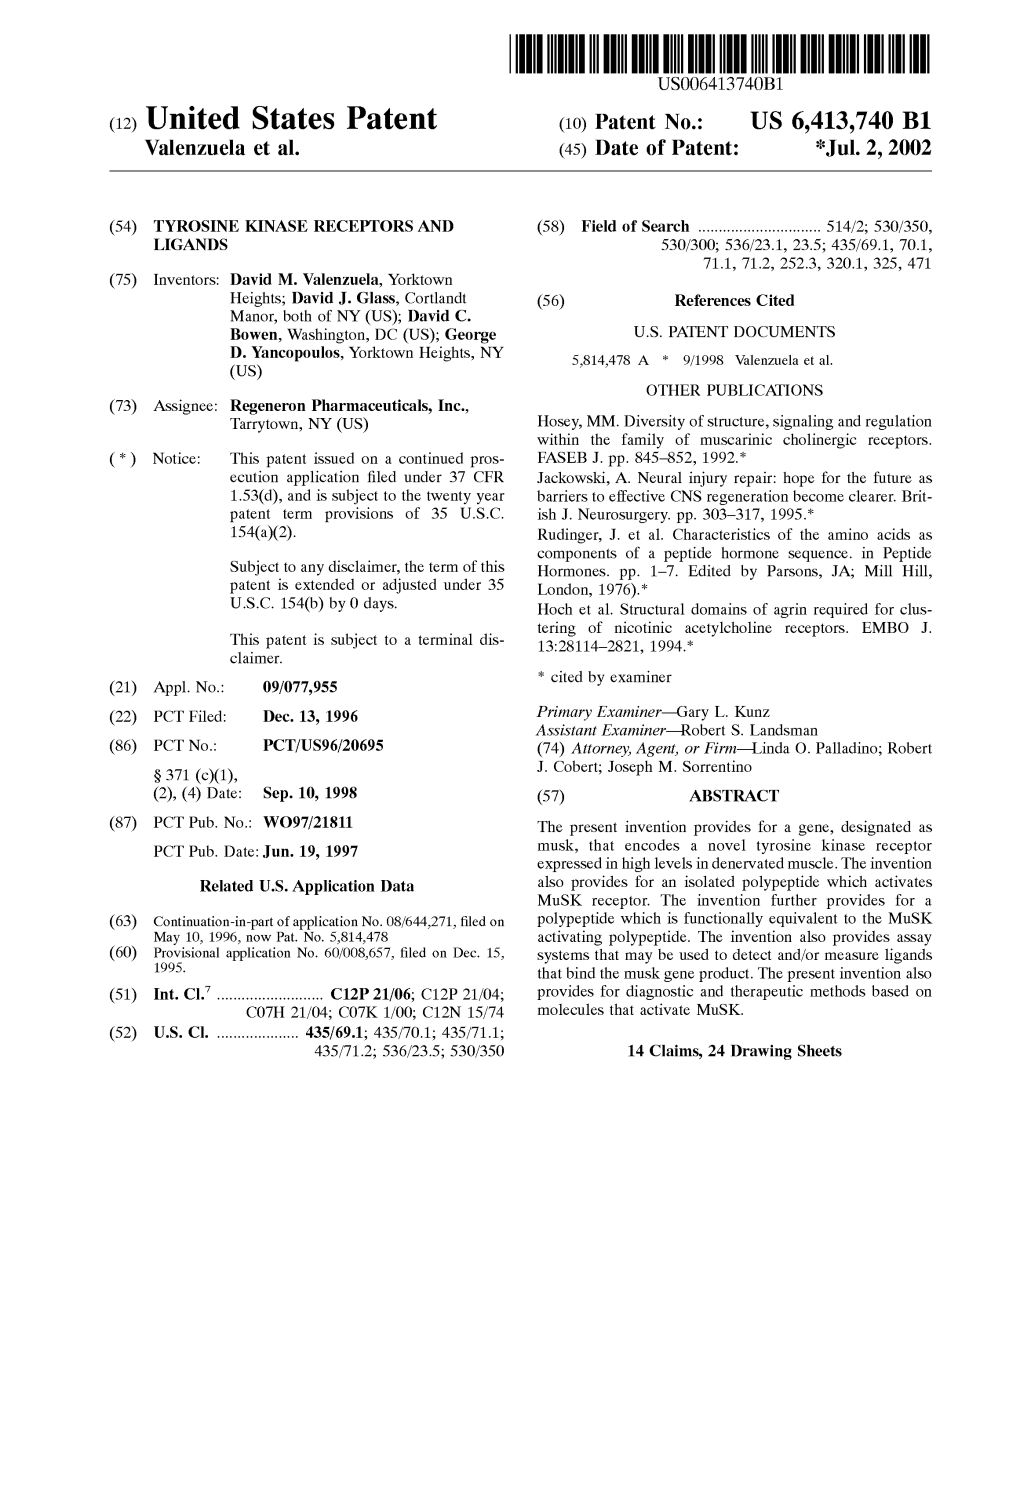 (12) United States Patent (10) Patent No.: US 6,413,740 B1 Valenzuela Et Al